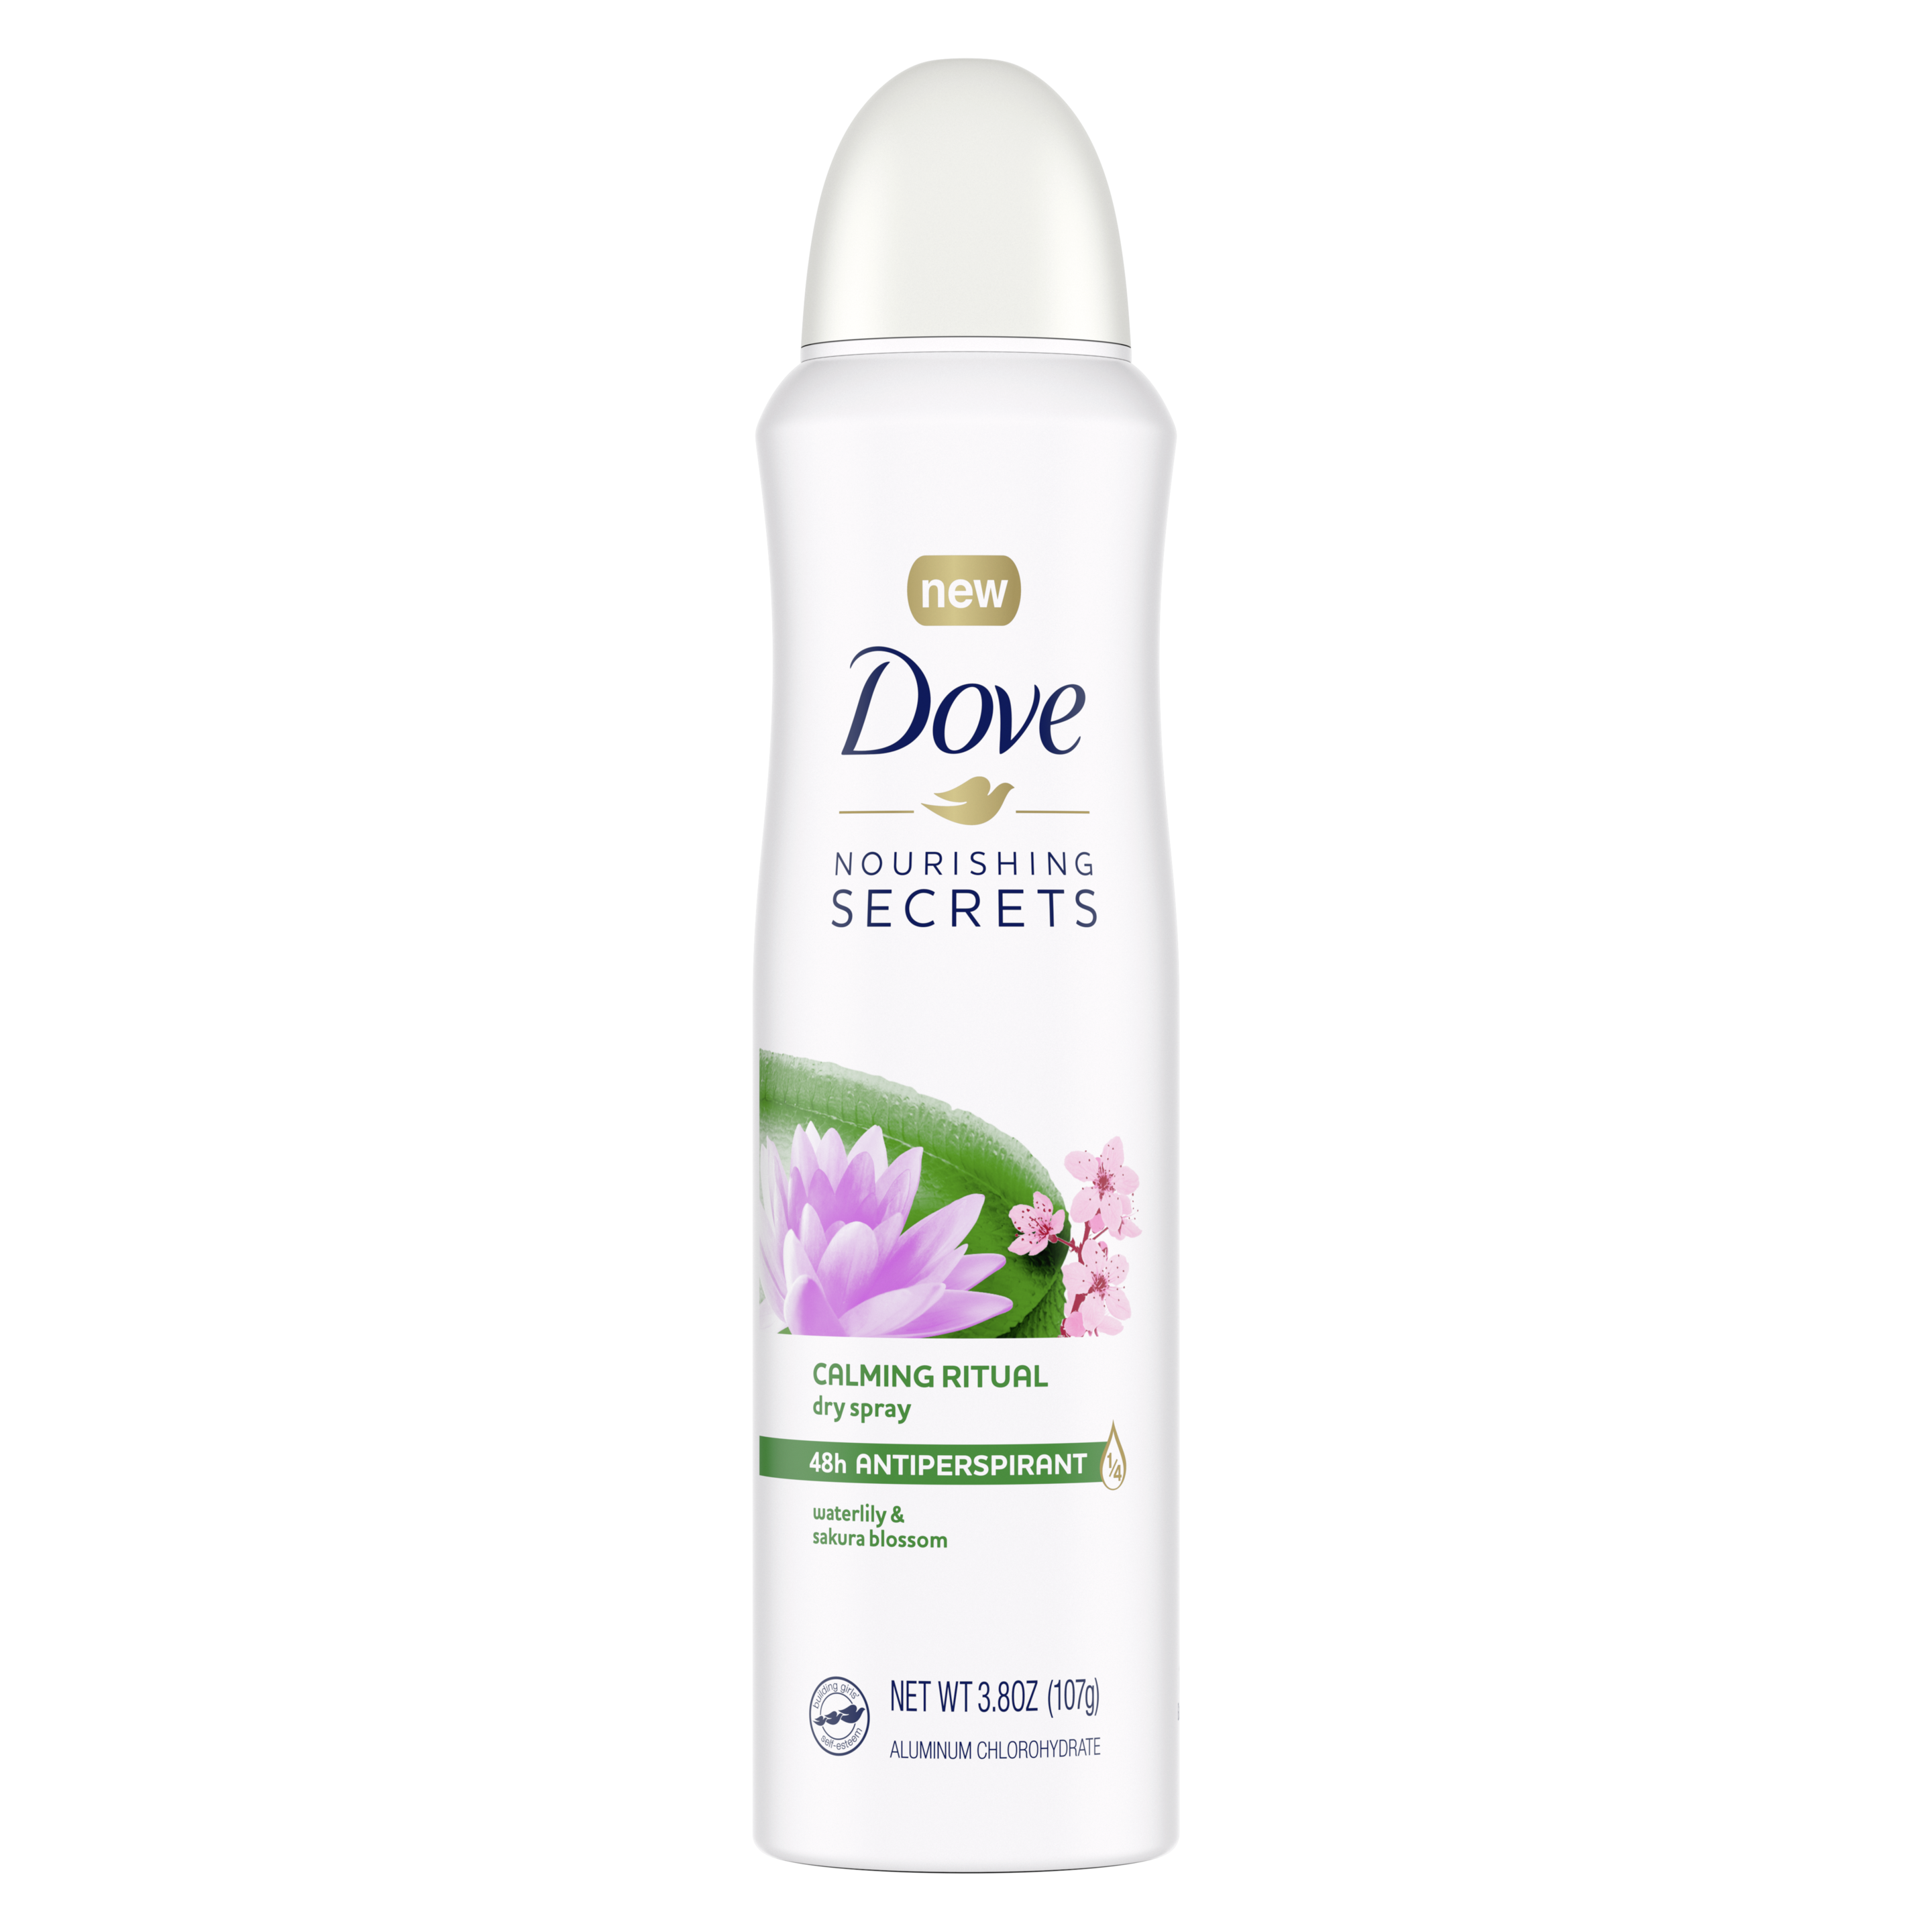 Dove Nourishing Secrets Dry Spray Antiperspirant Calming Ritual Waterlily and Sakura Blossom